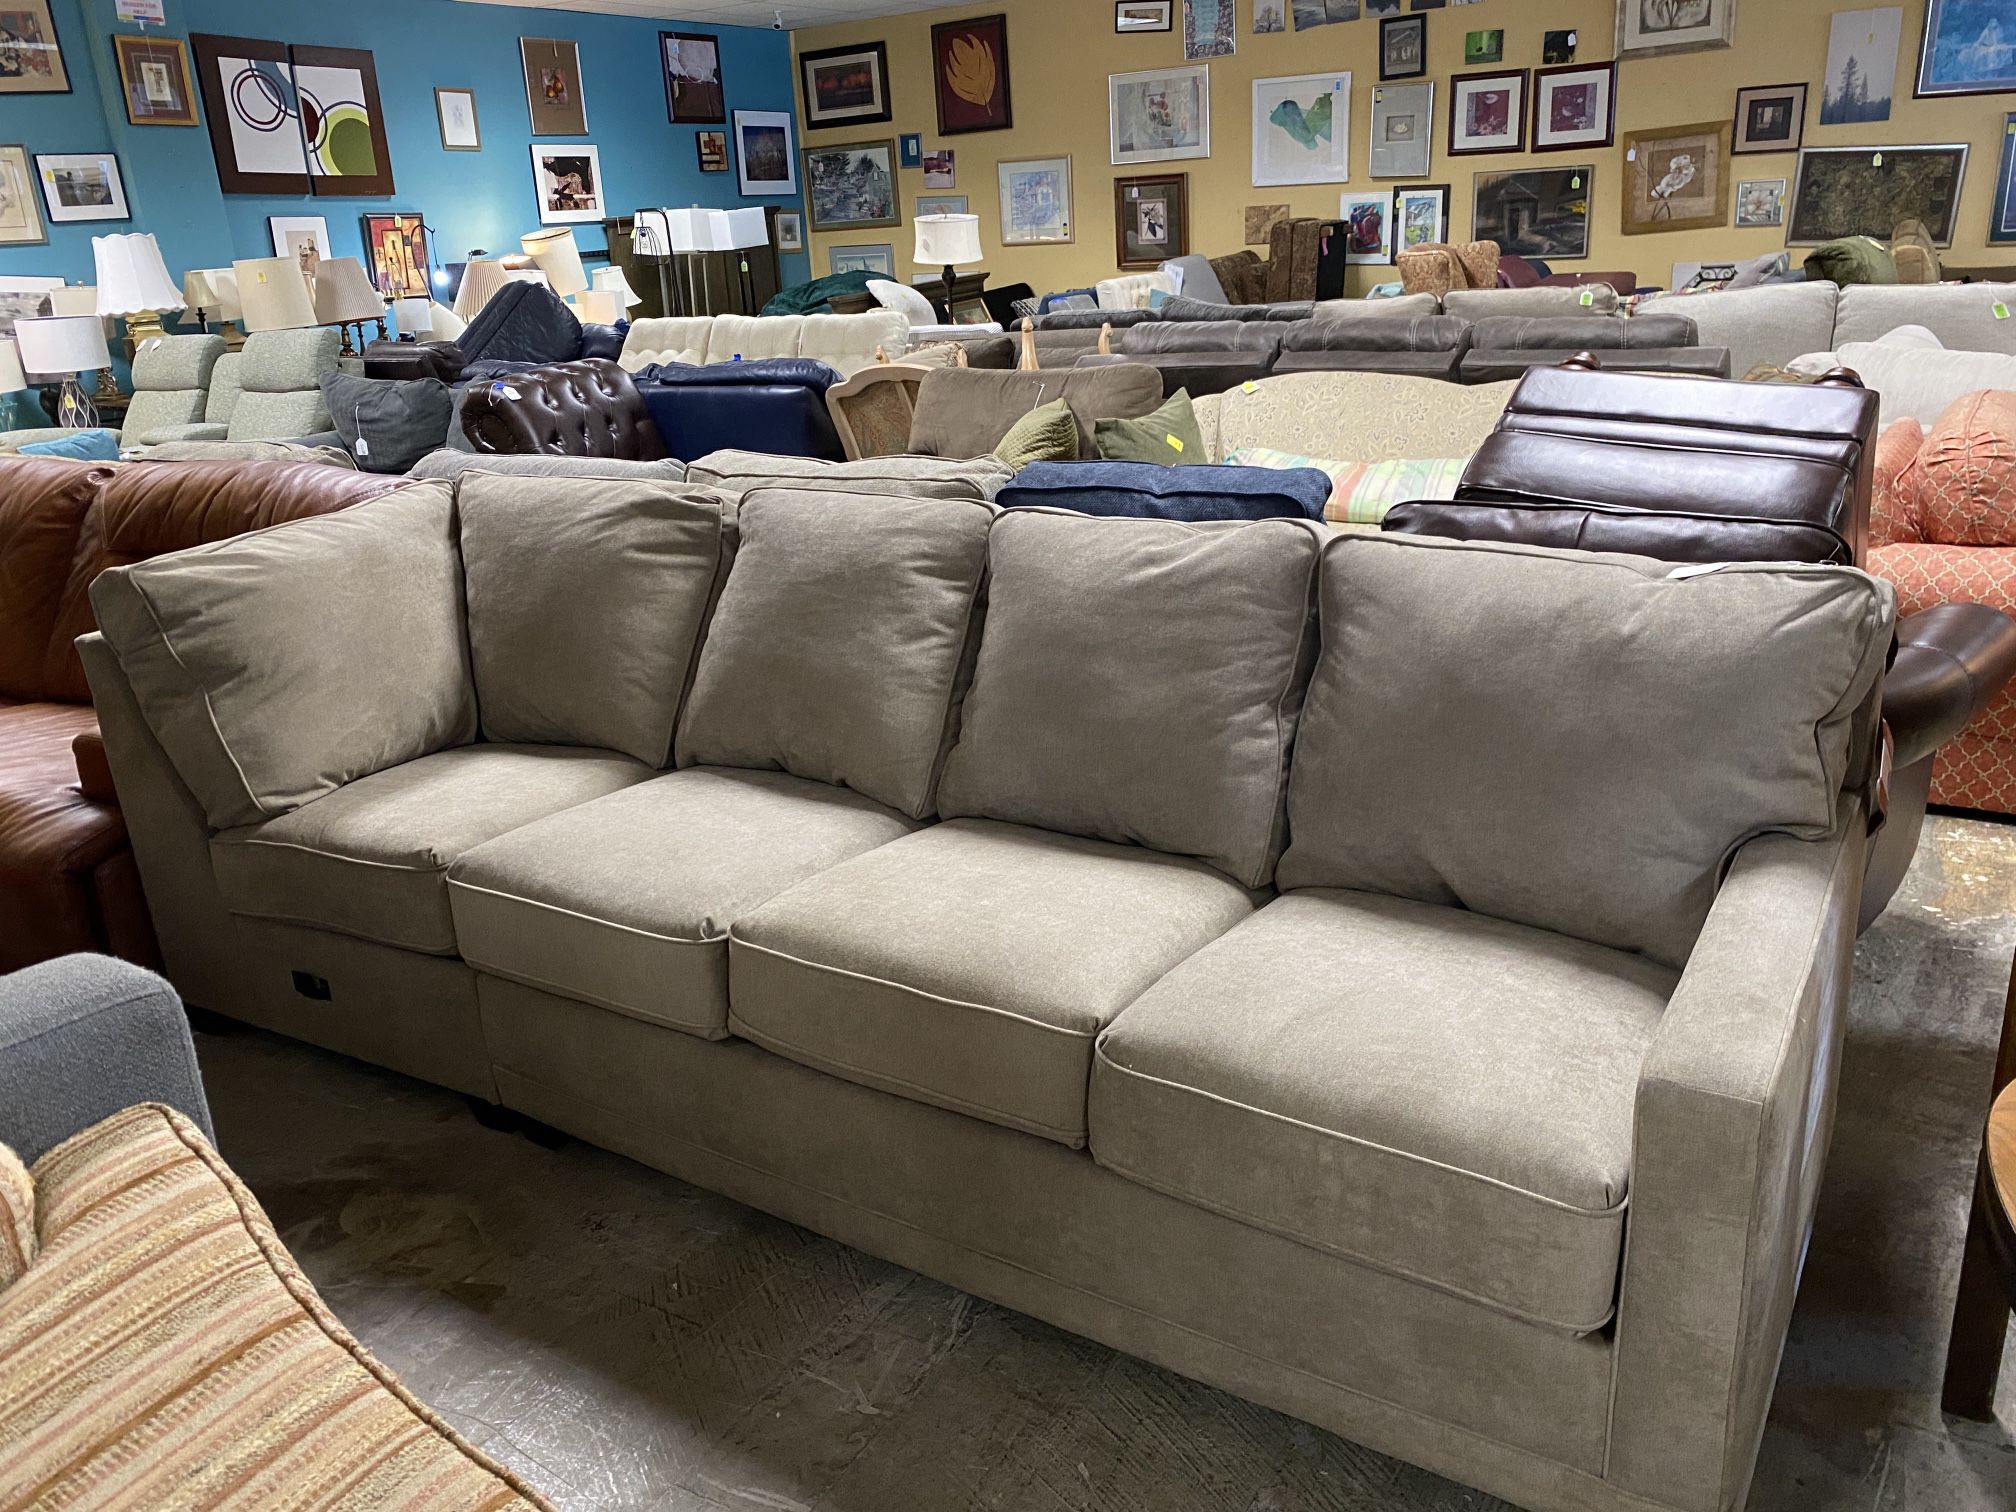 LA-Z-BOY 2 Piece Sectional Sofa (Missing Chaise Lounge)